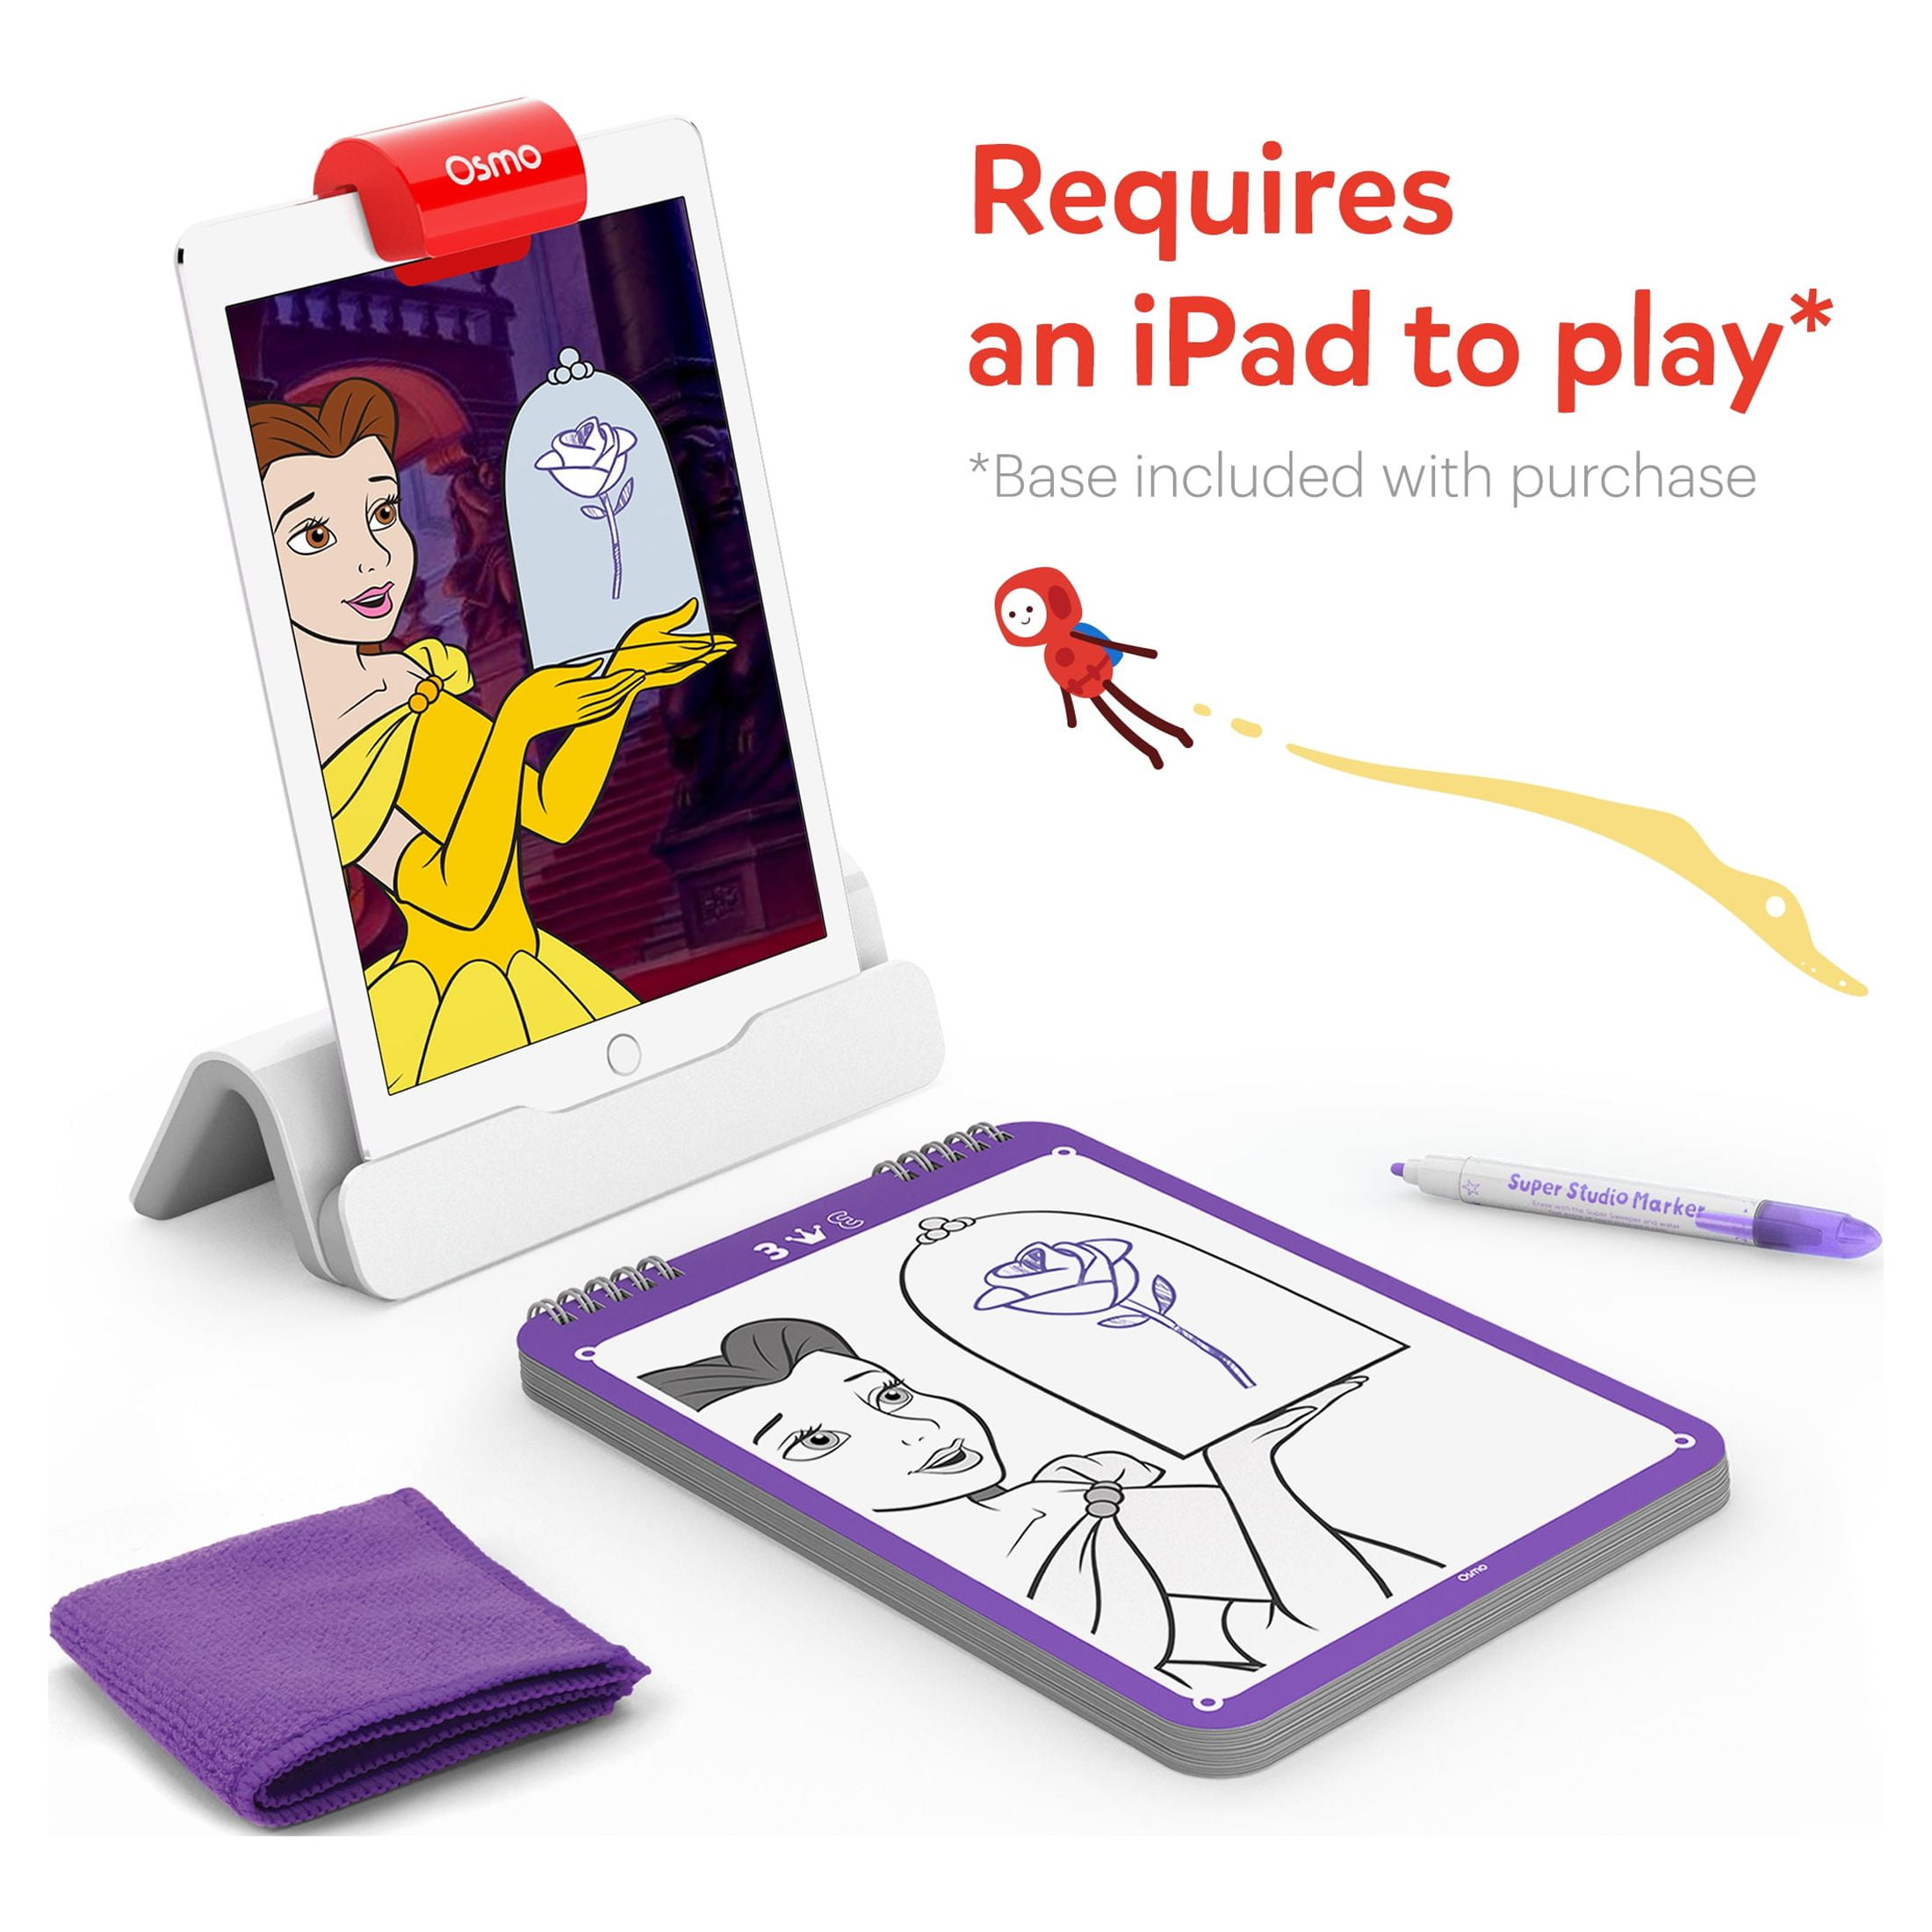 Osmo - Super Studio Disney Princess Starter Kit for iPad, Ages 5-11